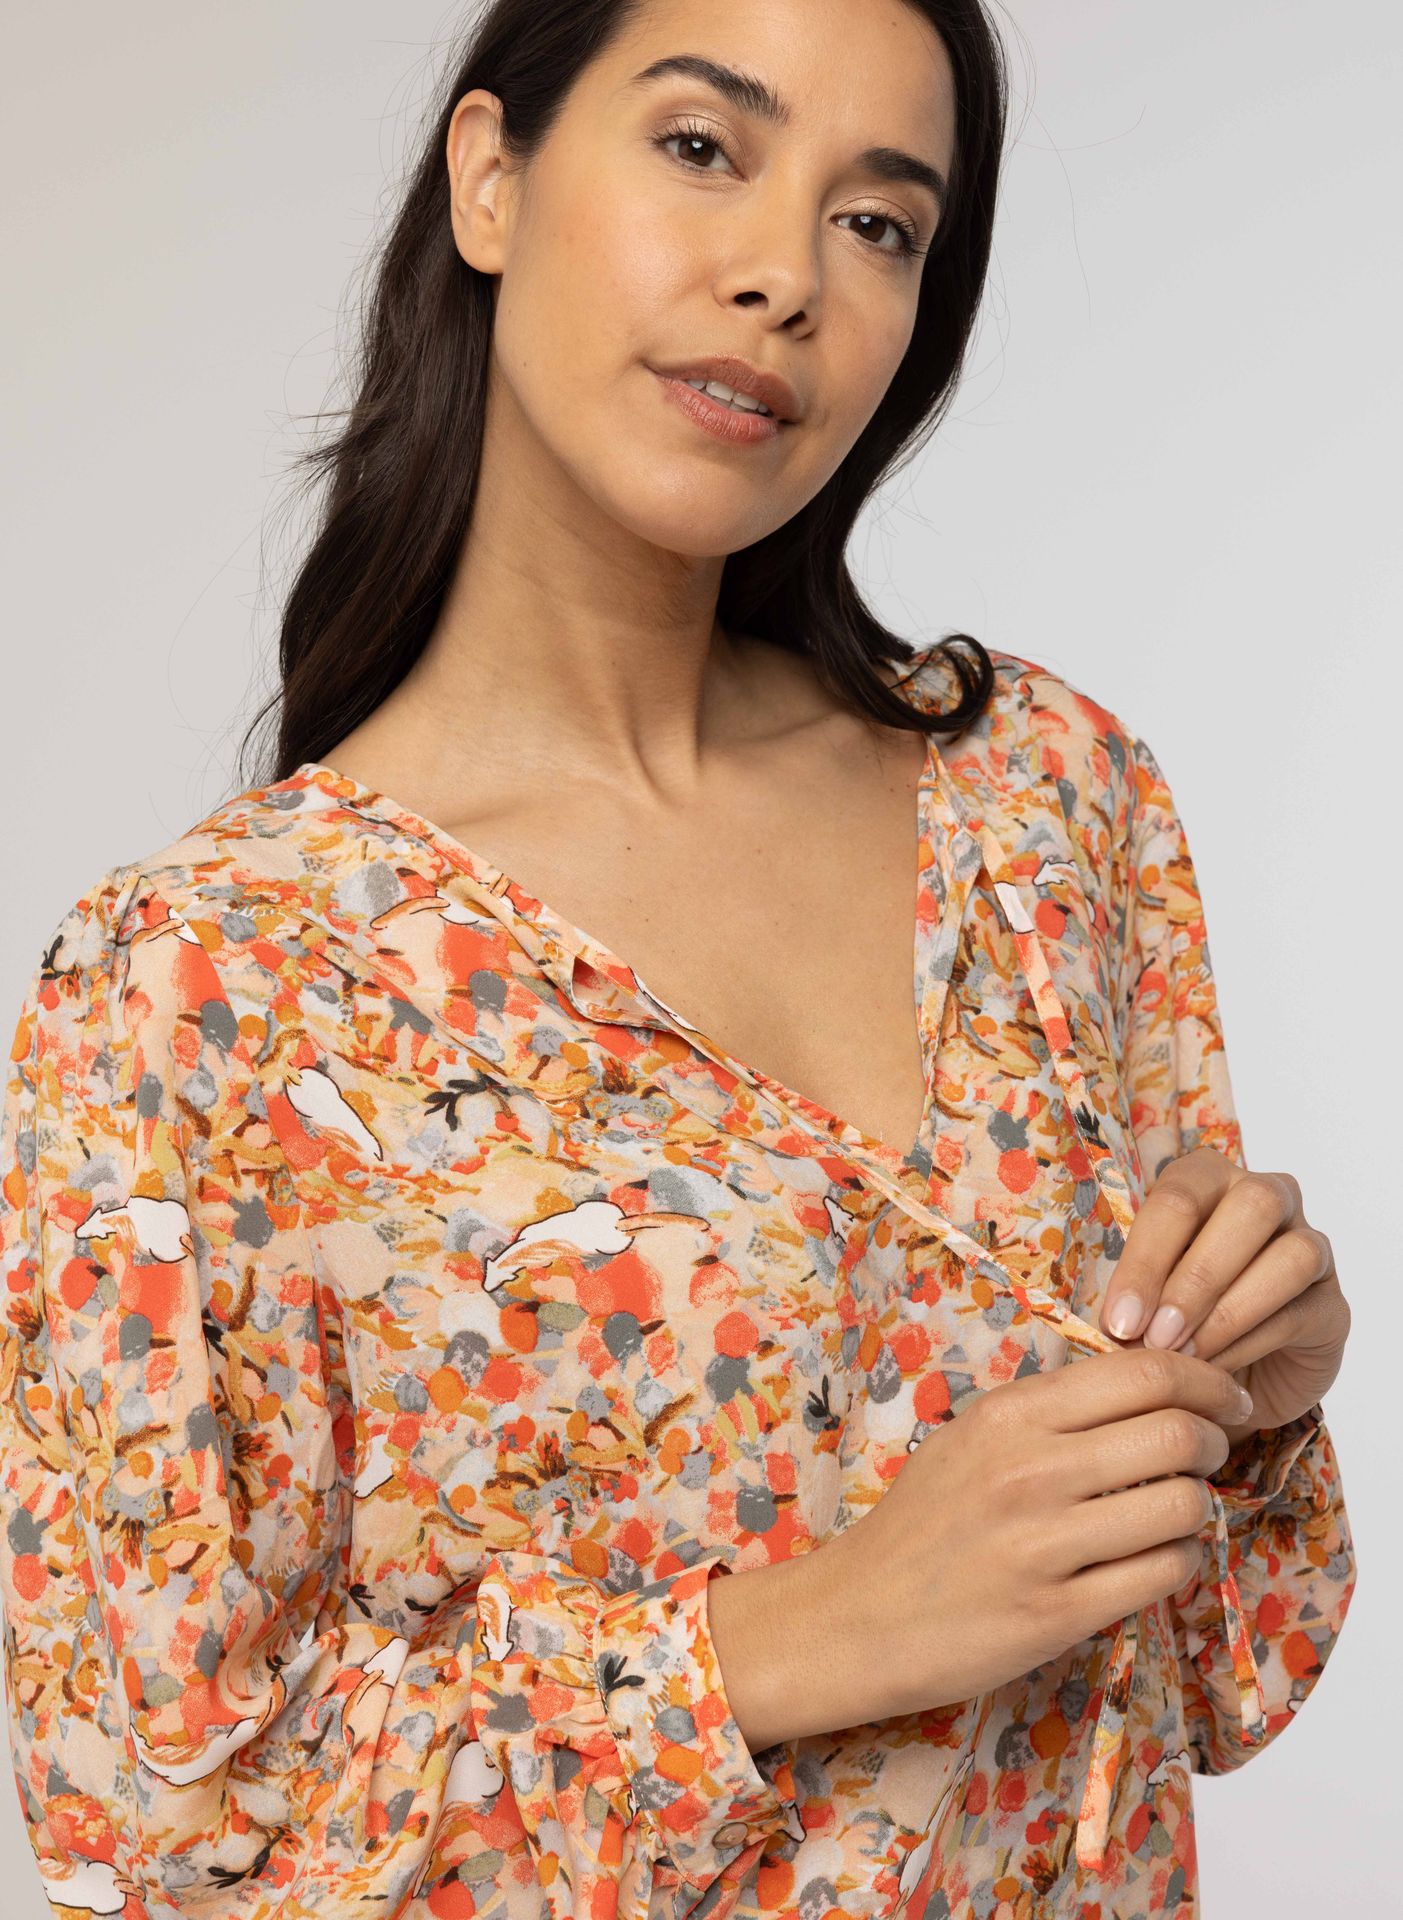 Norah Meerkleurige blouse met koordjes multicolor 214125-002